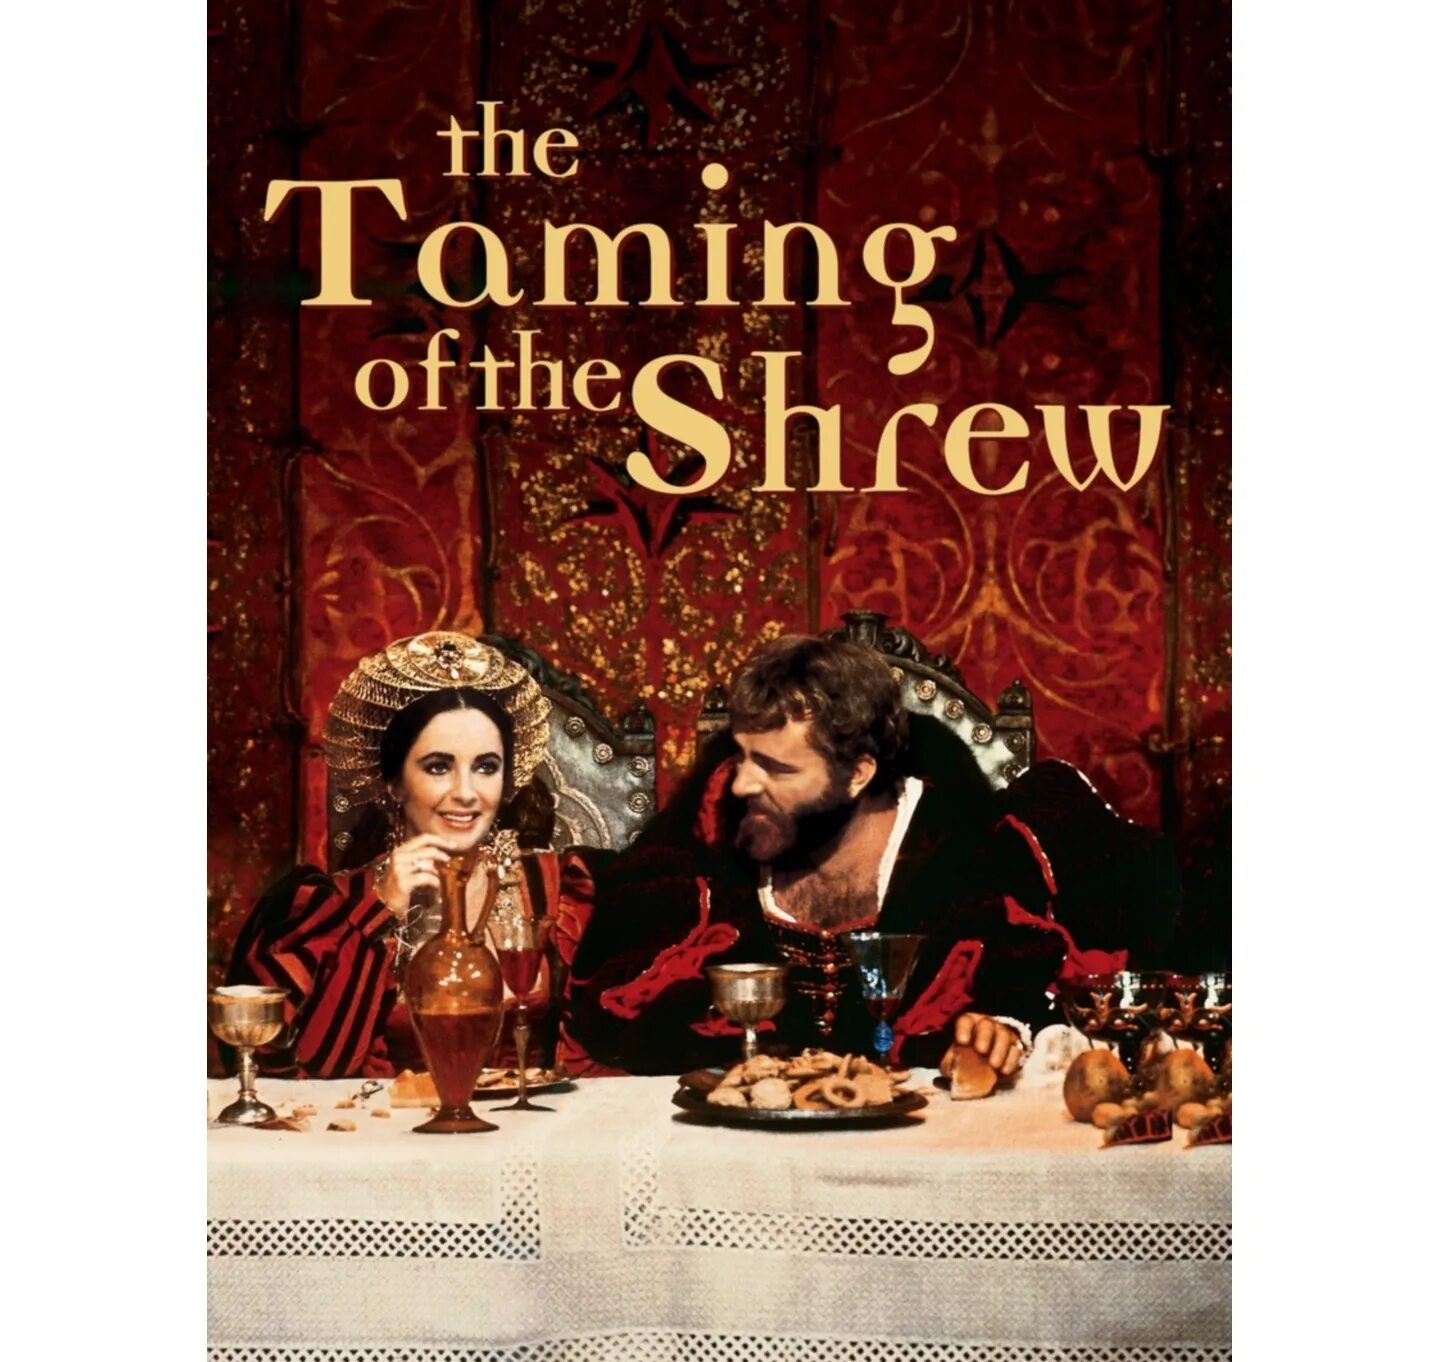 The Taming of the shrewd. Укрощение строптивой Шекспир. Укрощение строптивой 2005. Манга the Taming of the Shrew. The taming of the shrew